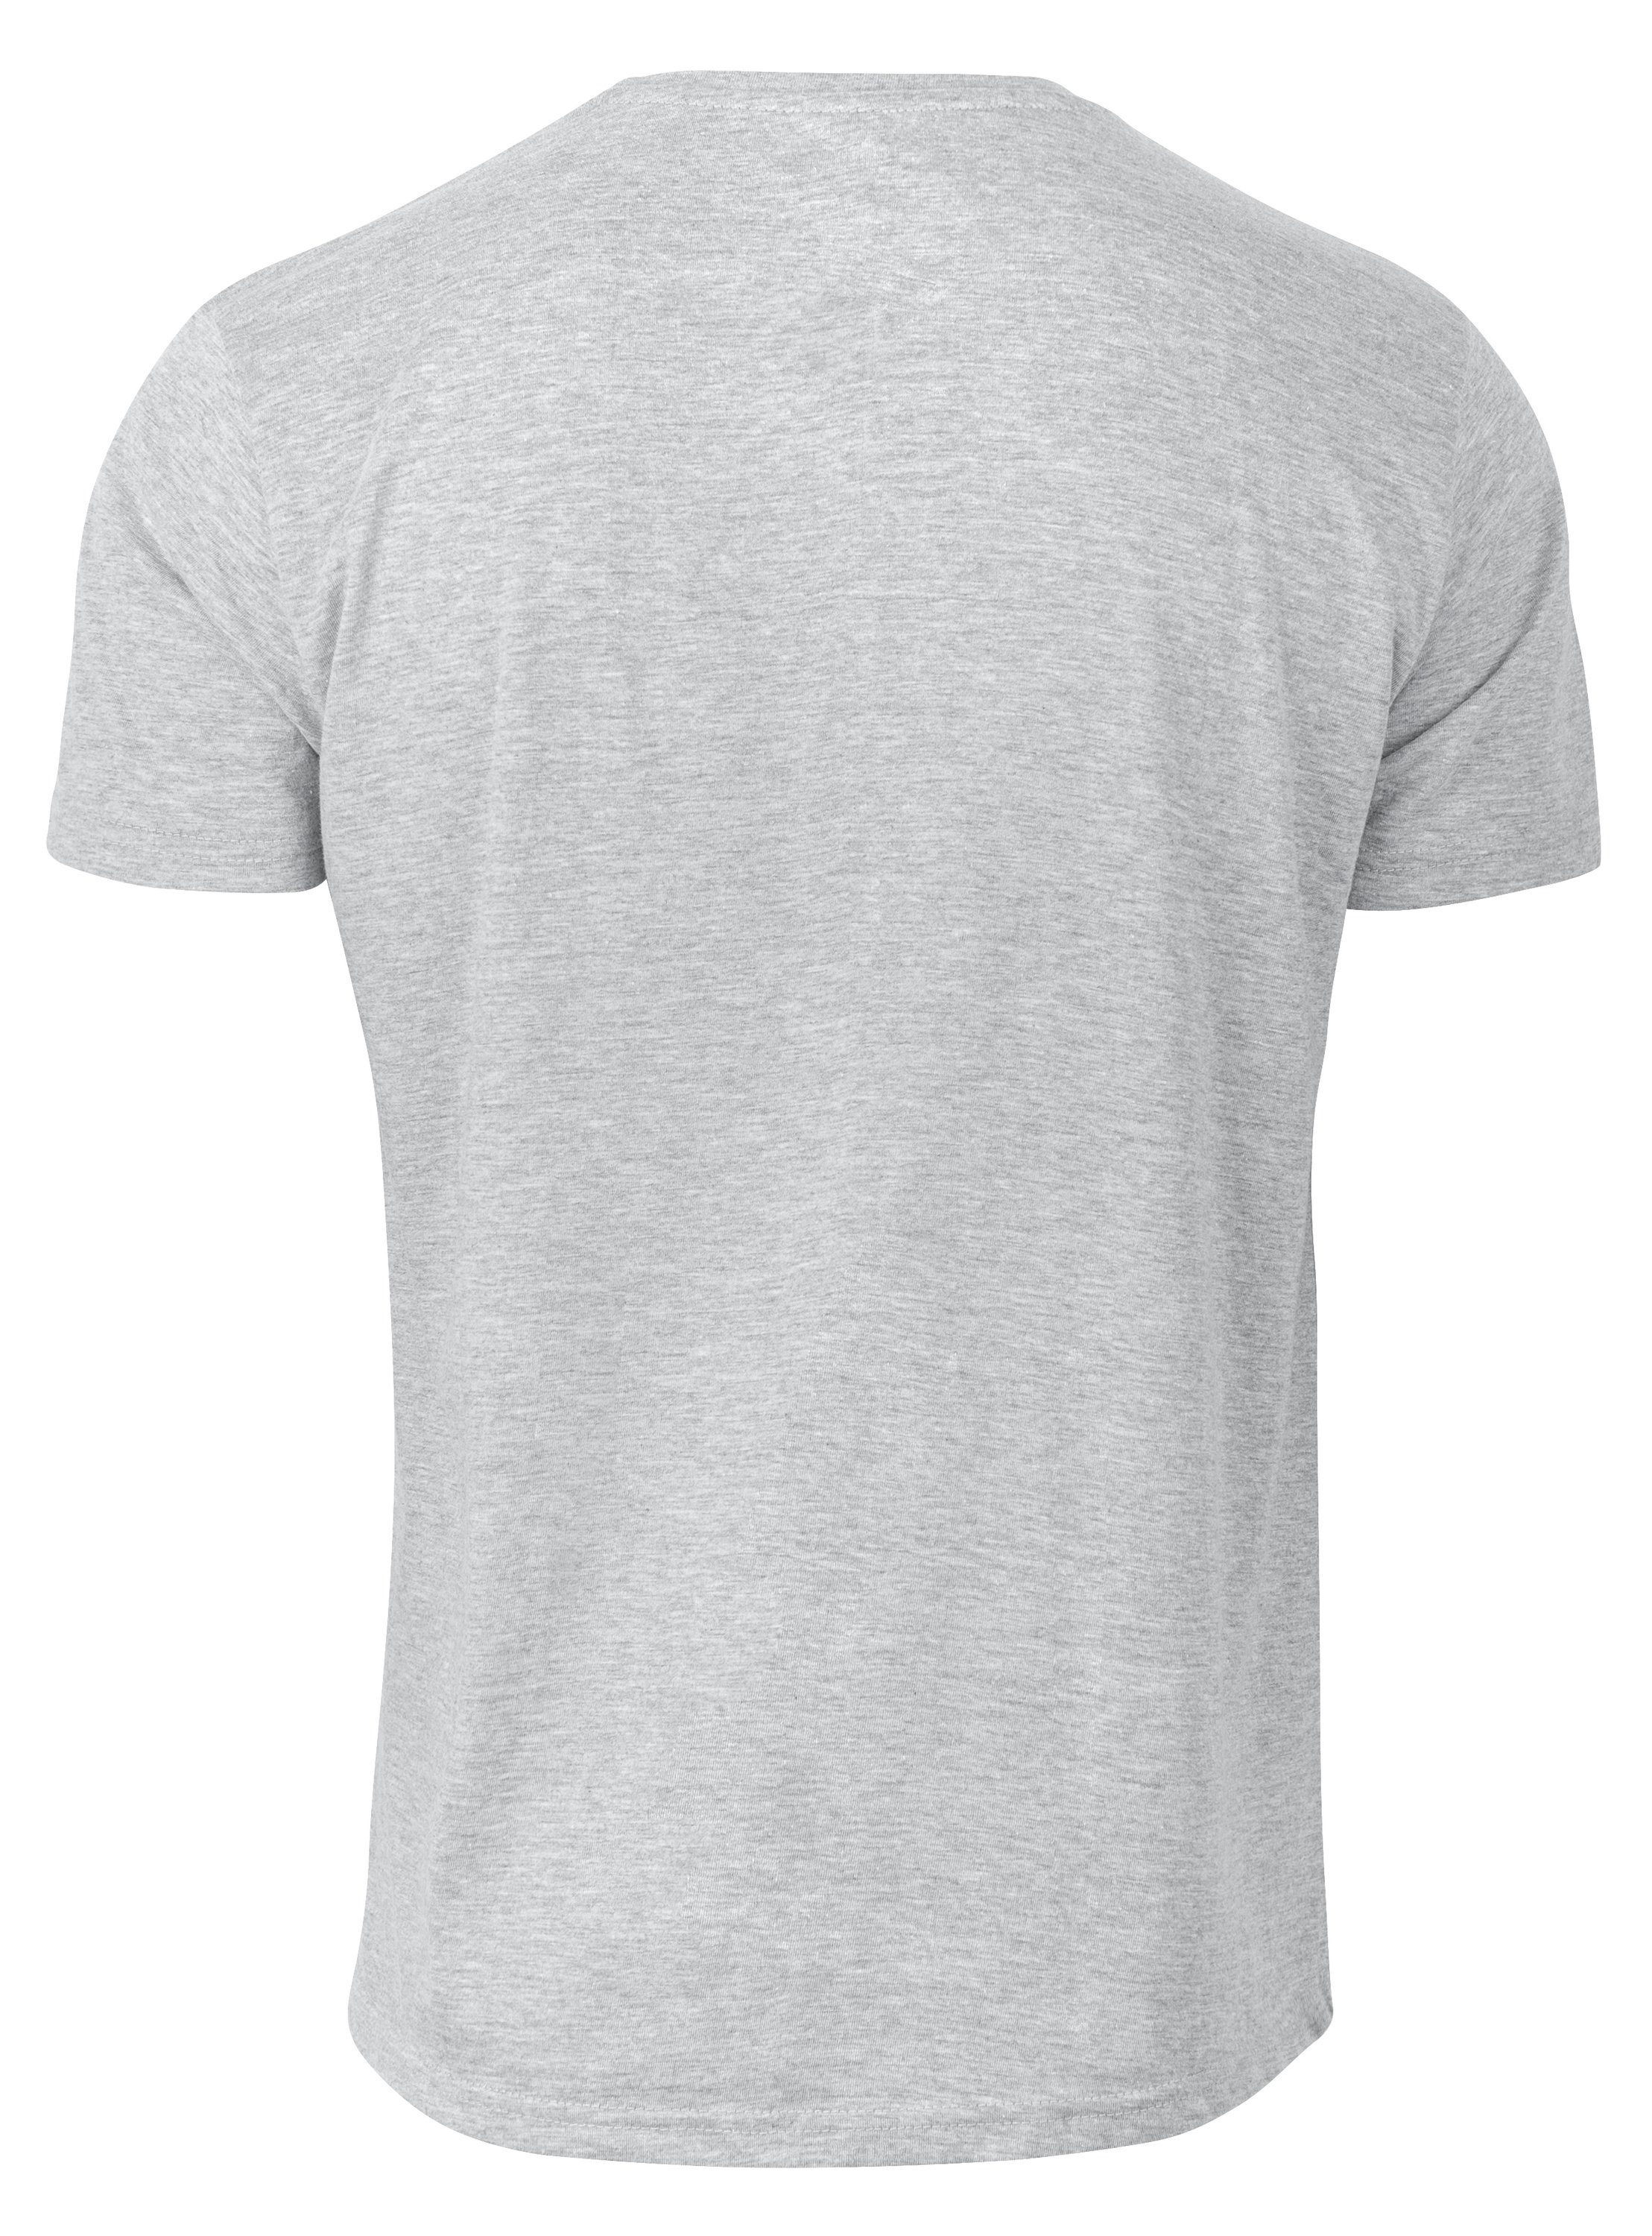 T-Shirt Grau Vorderrad Cotton - Prime®